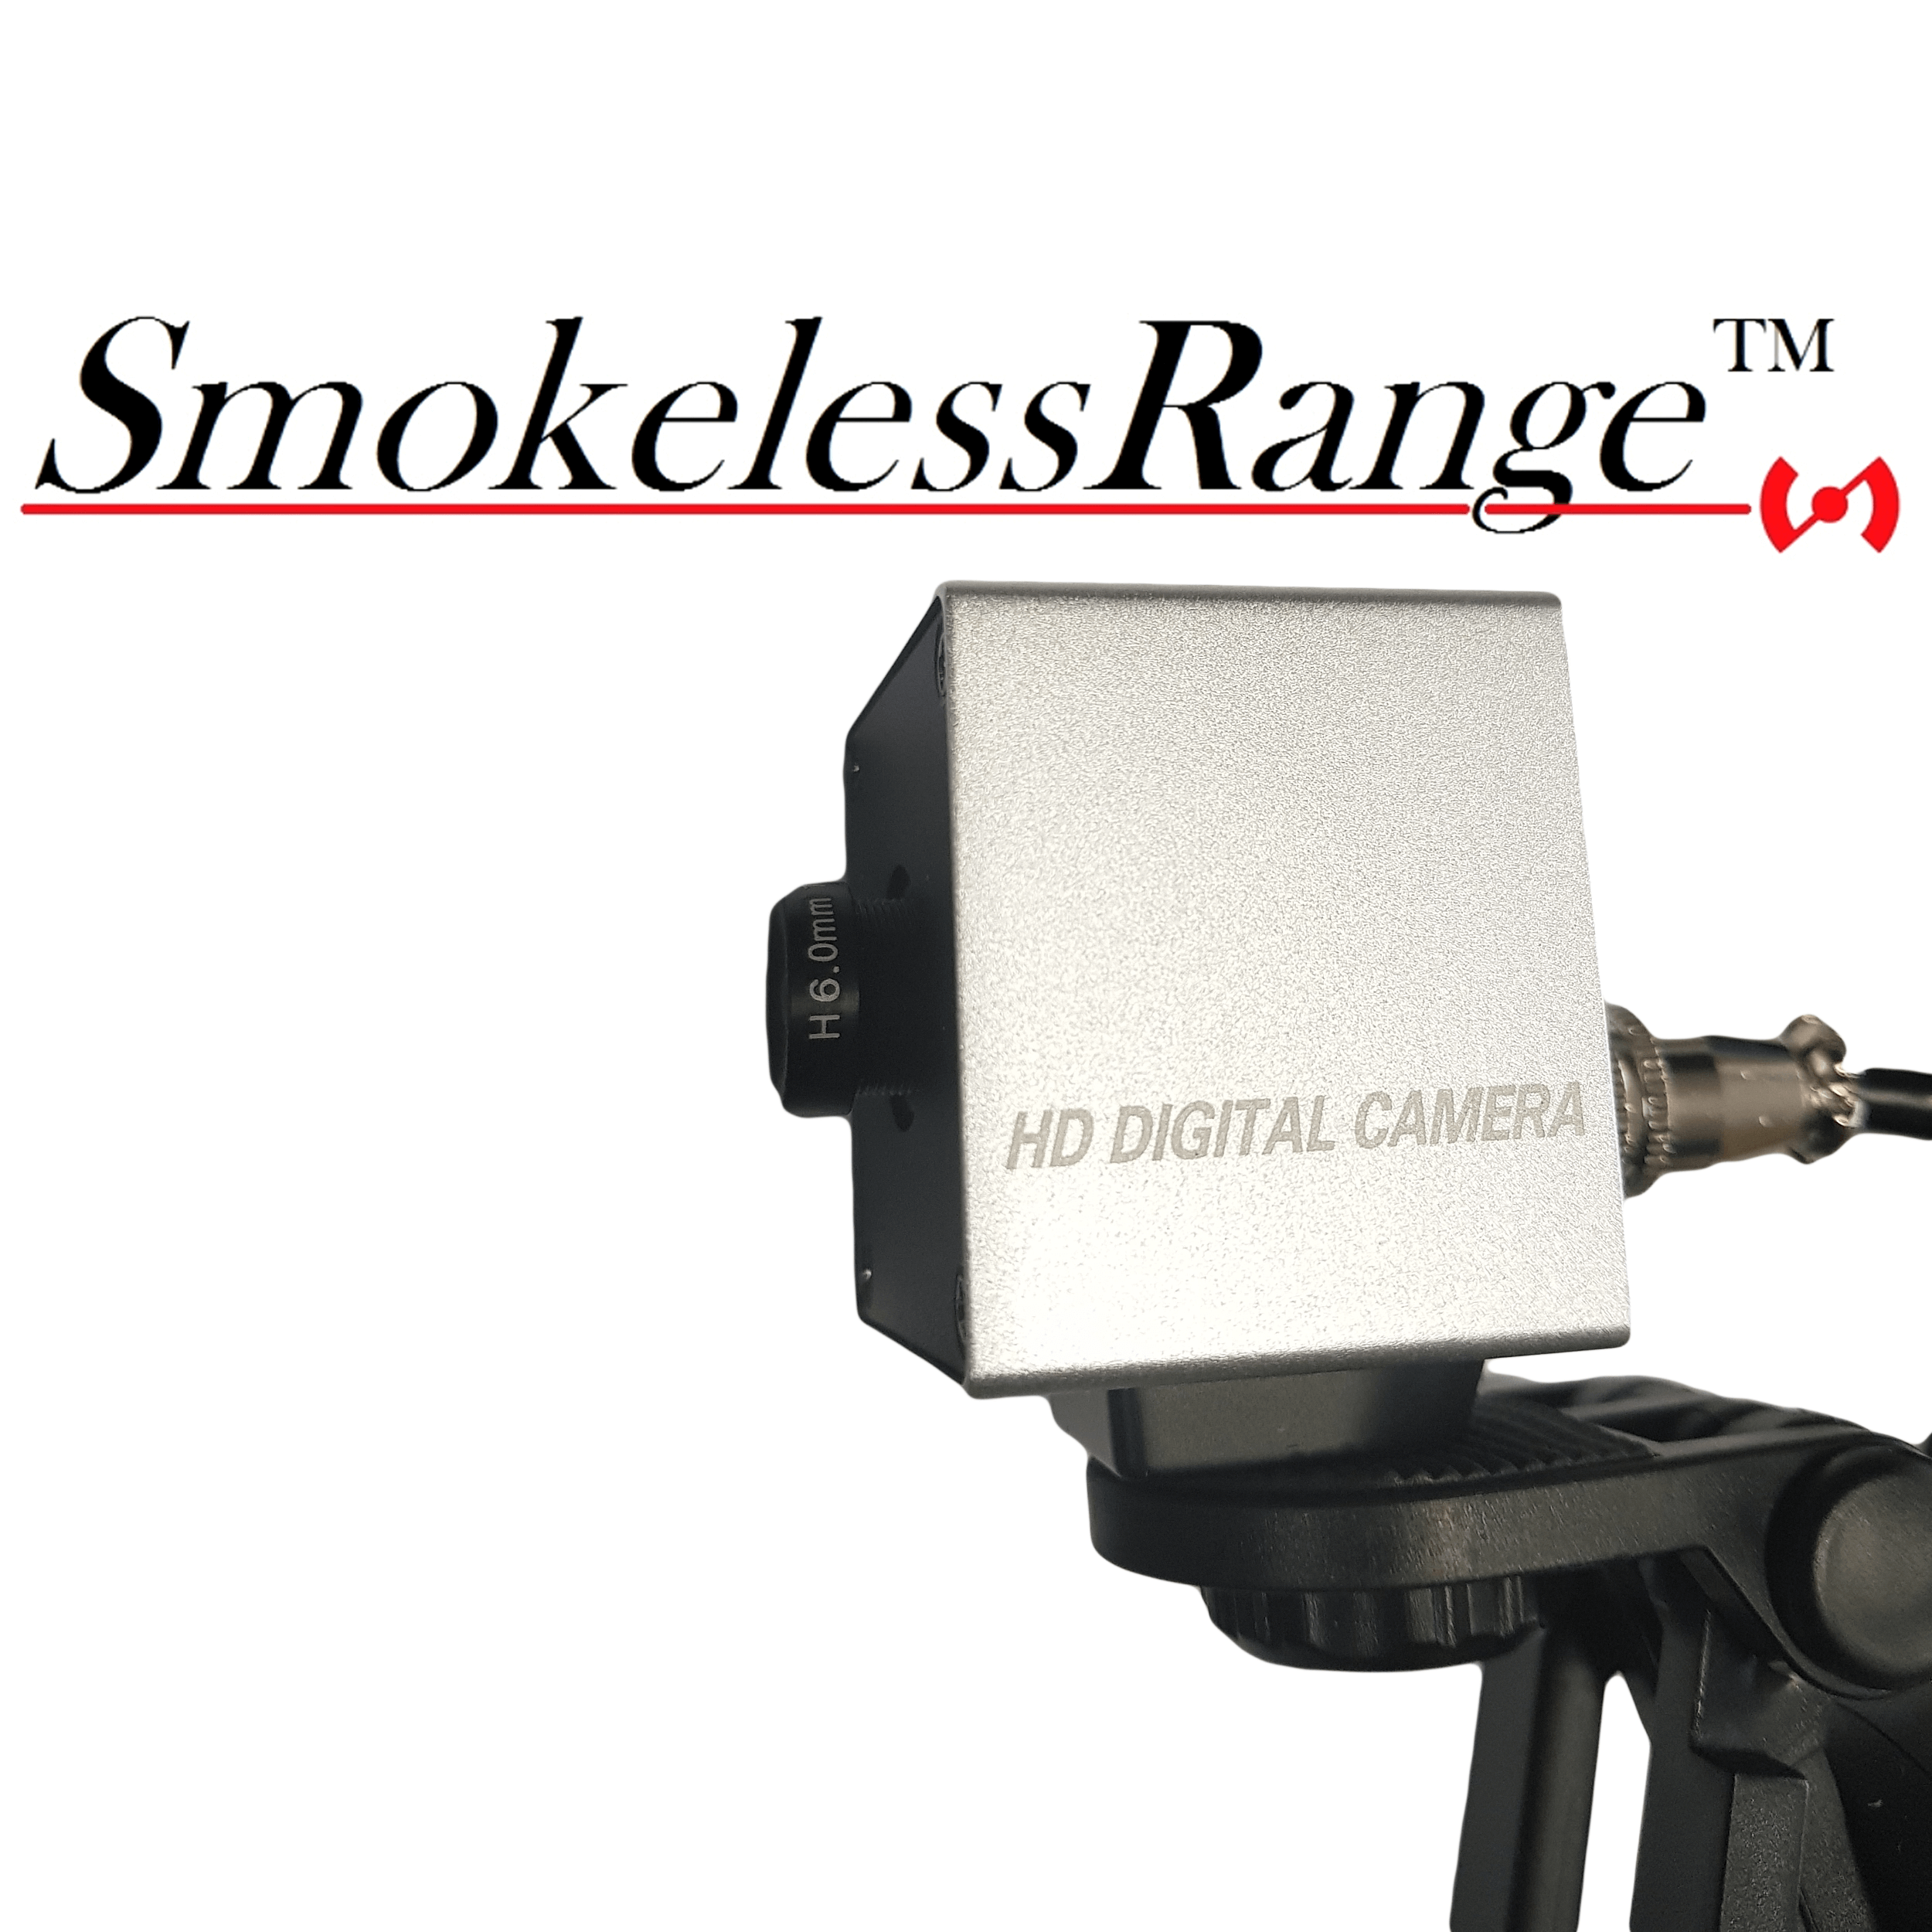 Smokeless Range® 2.0 - Home Simulator - SR001